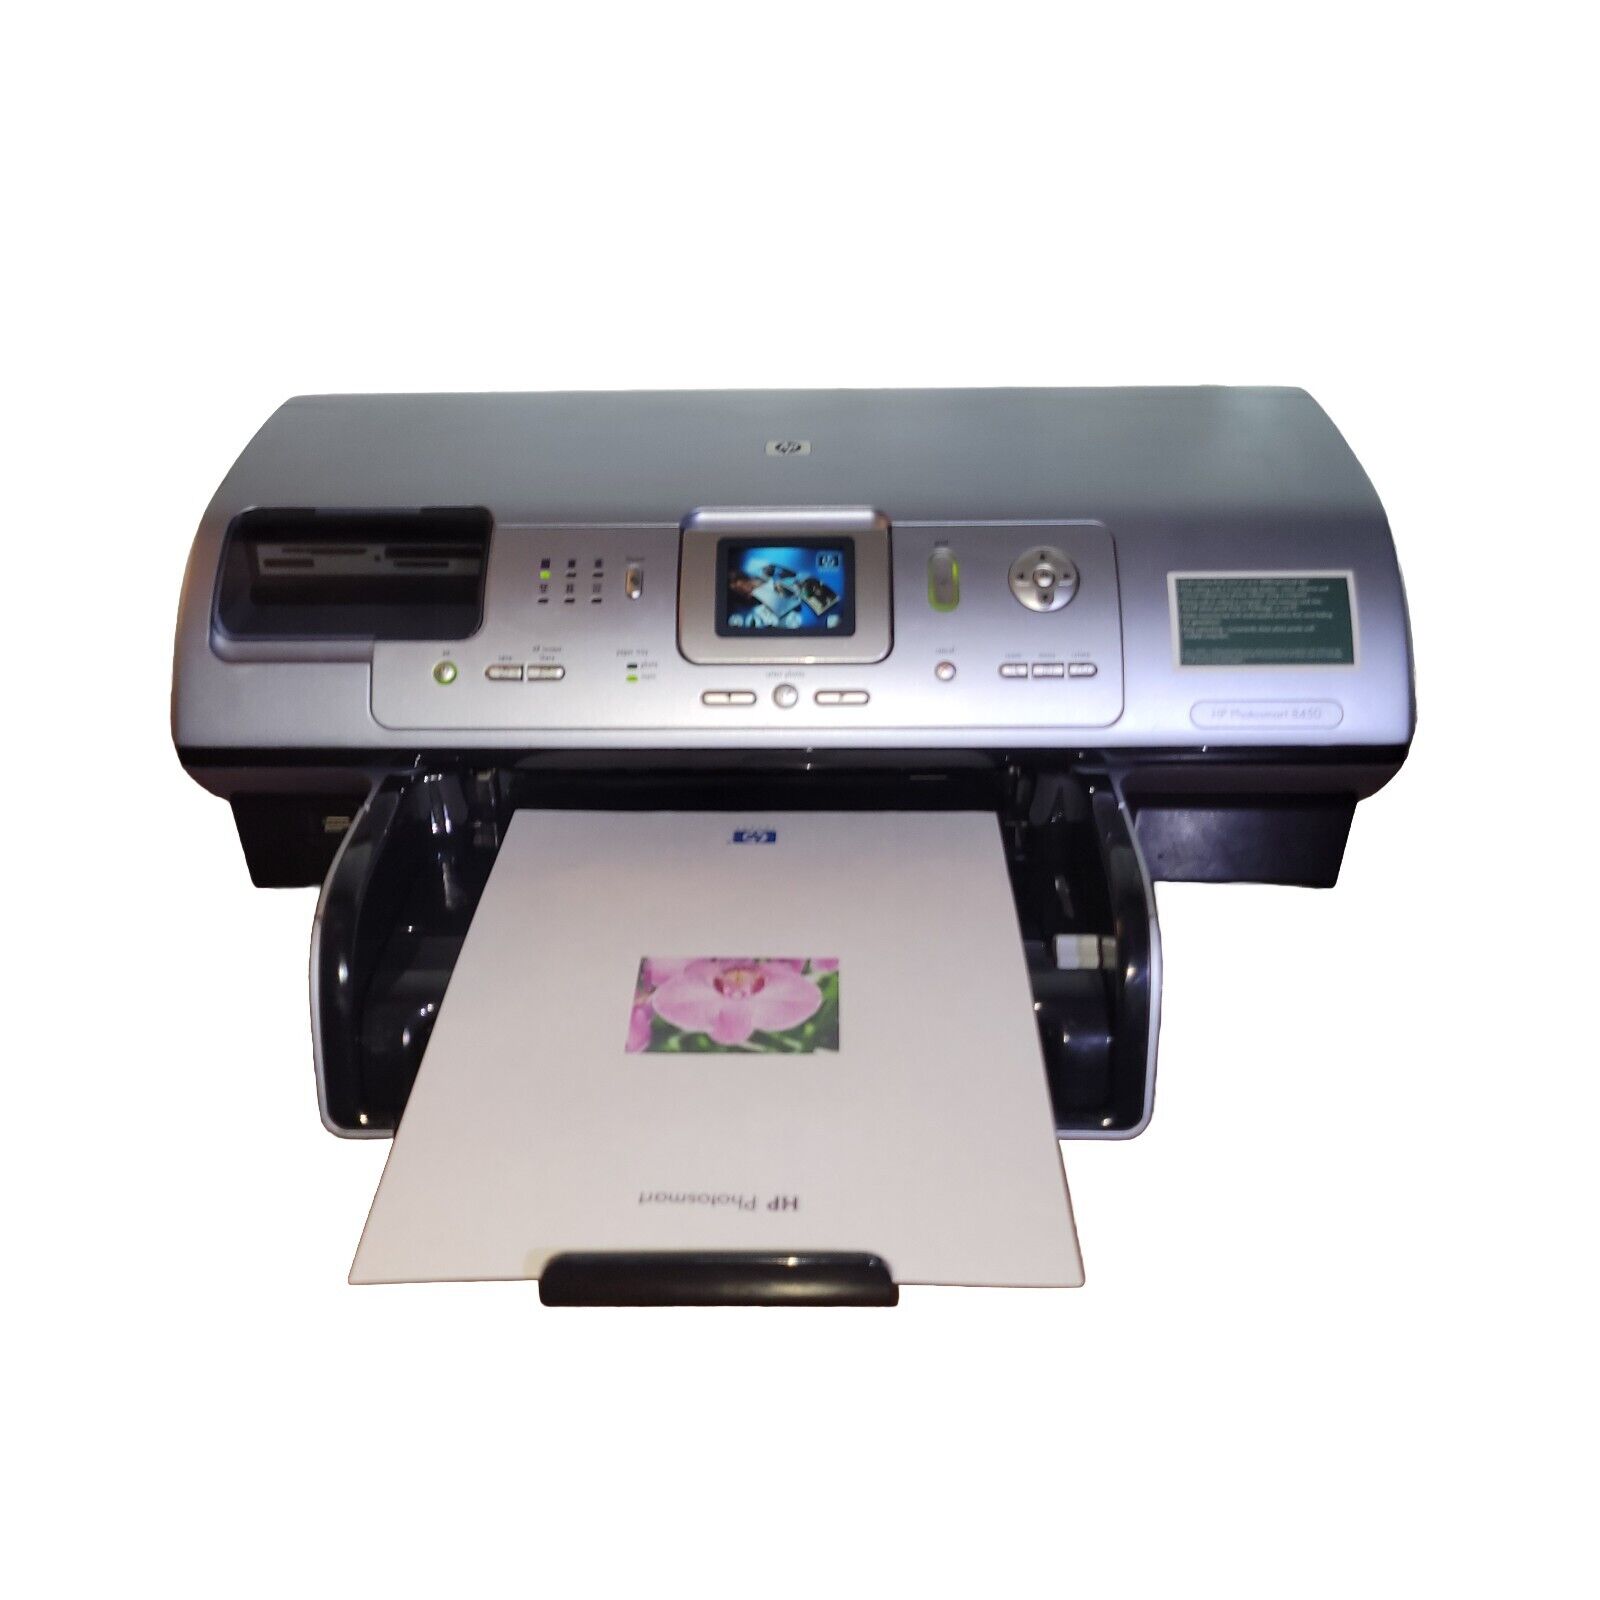 HP Photosmart 8450 Digital Color Photo Inkjet Printer - With HP Power Supply